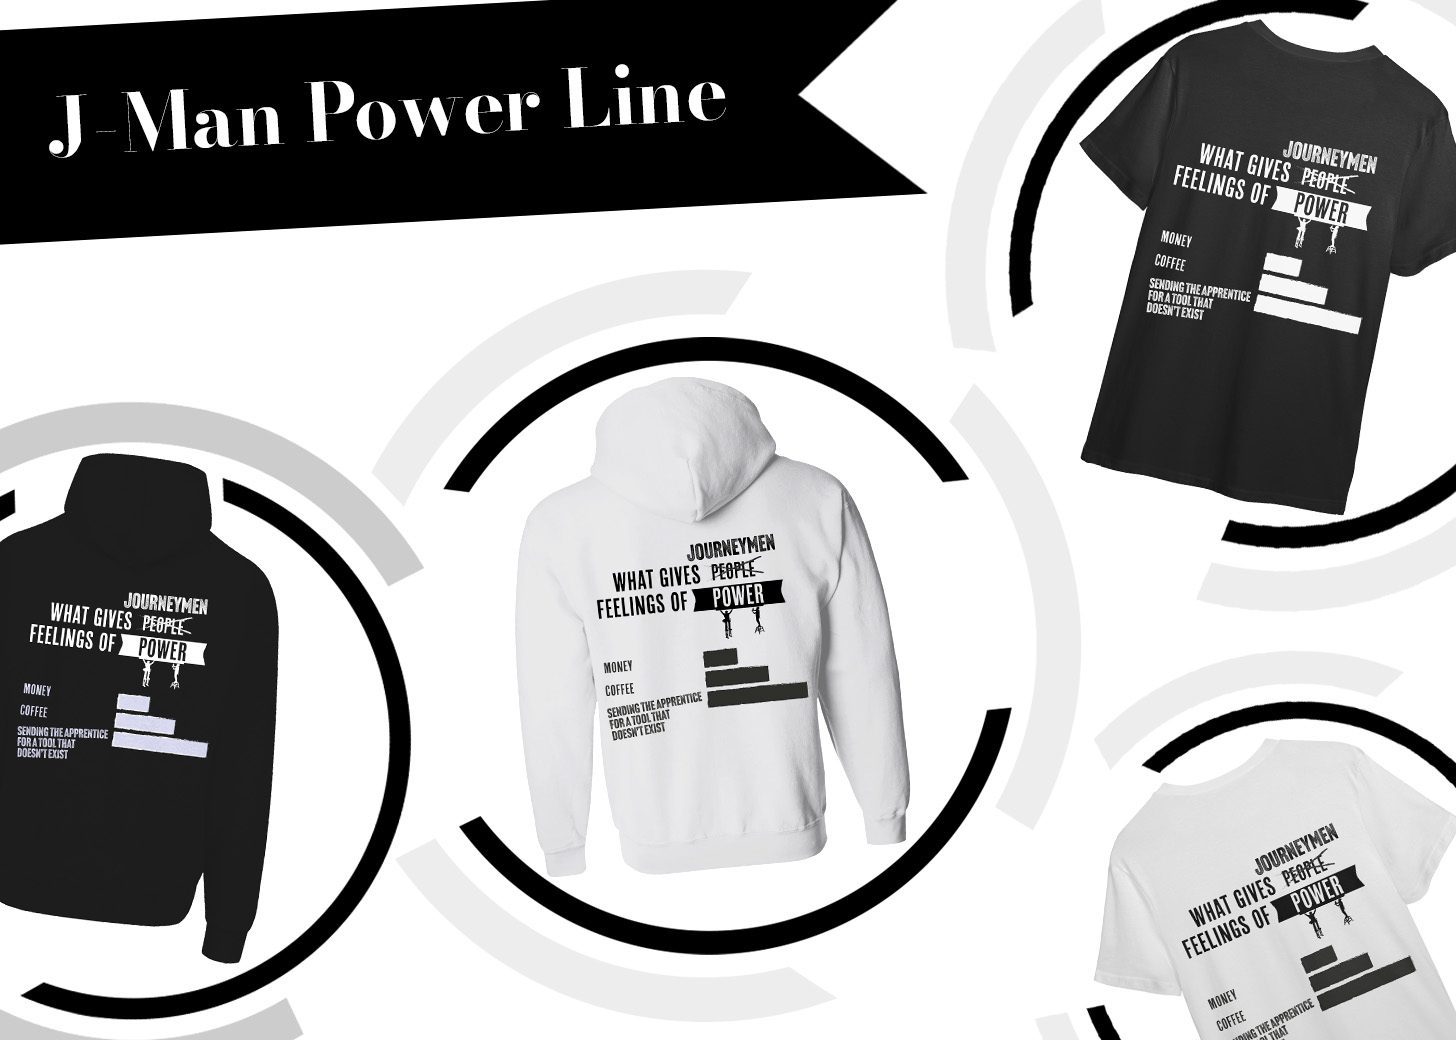 J-Man Power Line